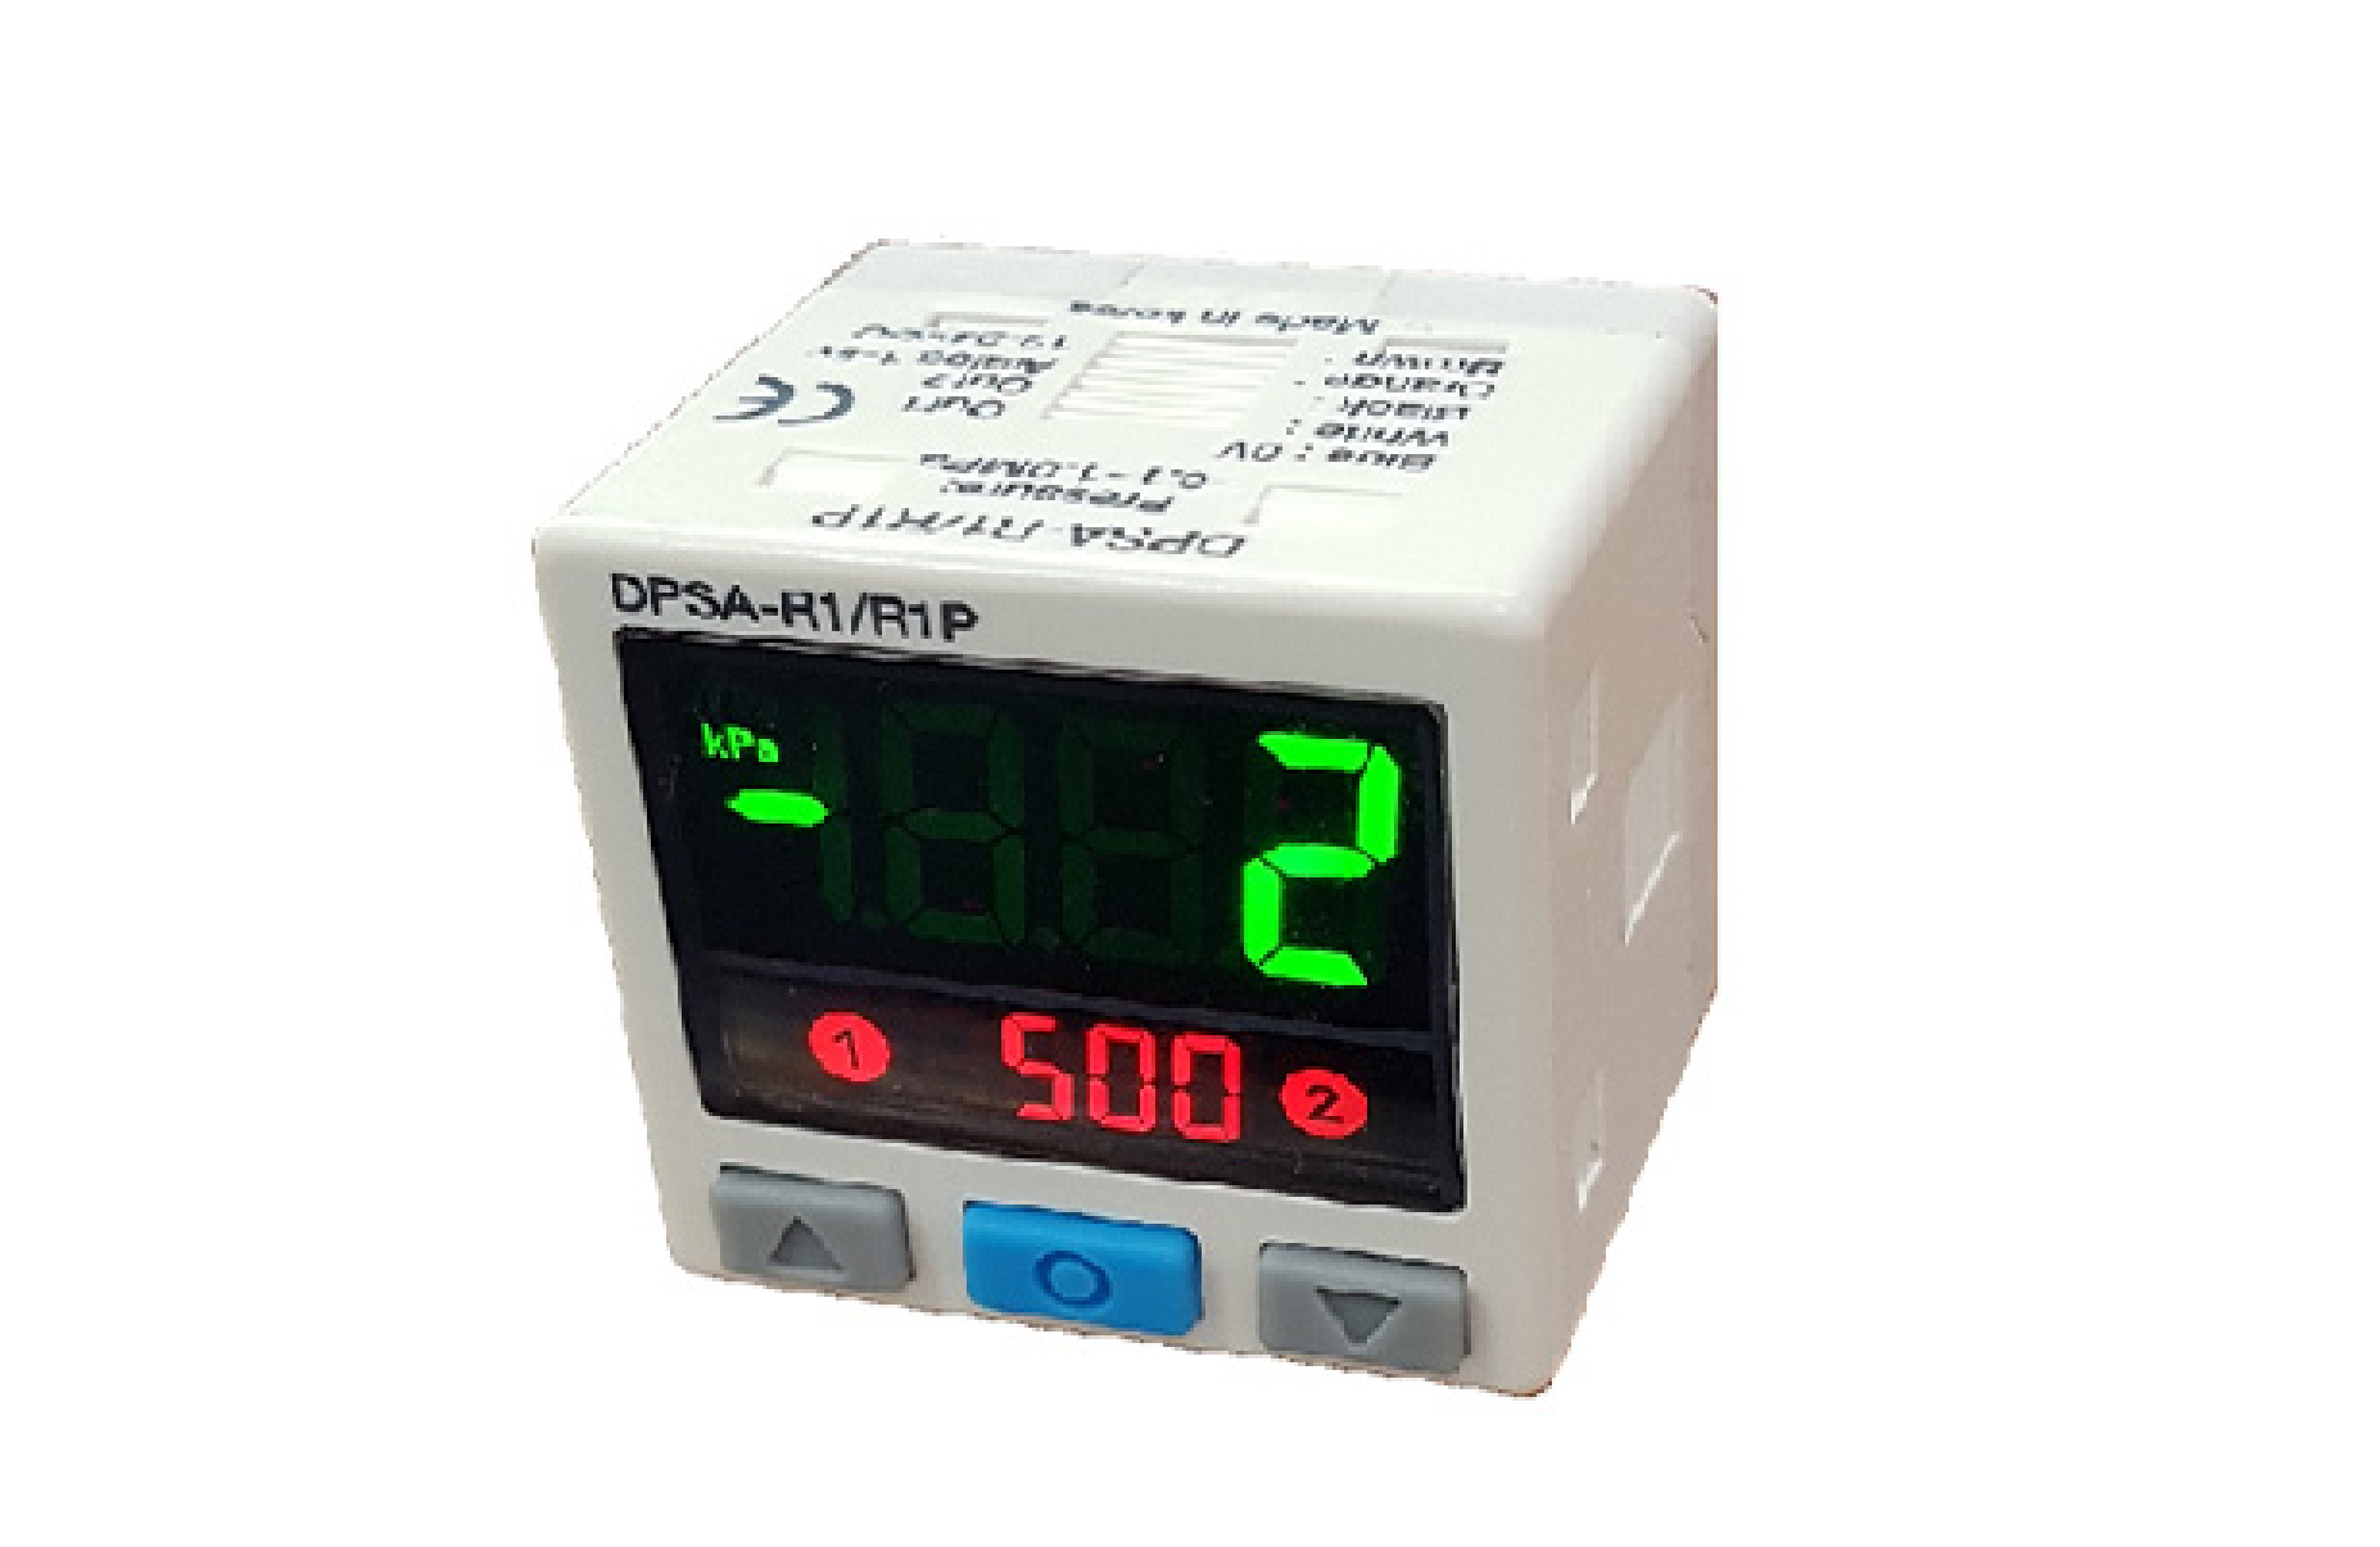 DPSA model digital pressure switch